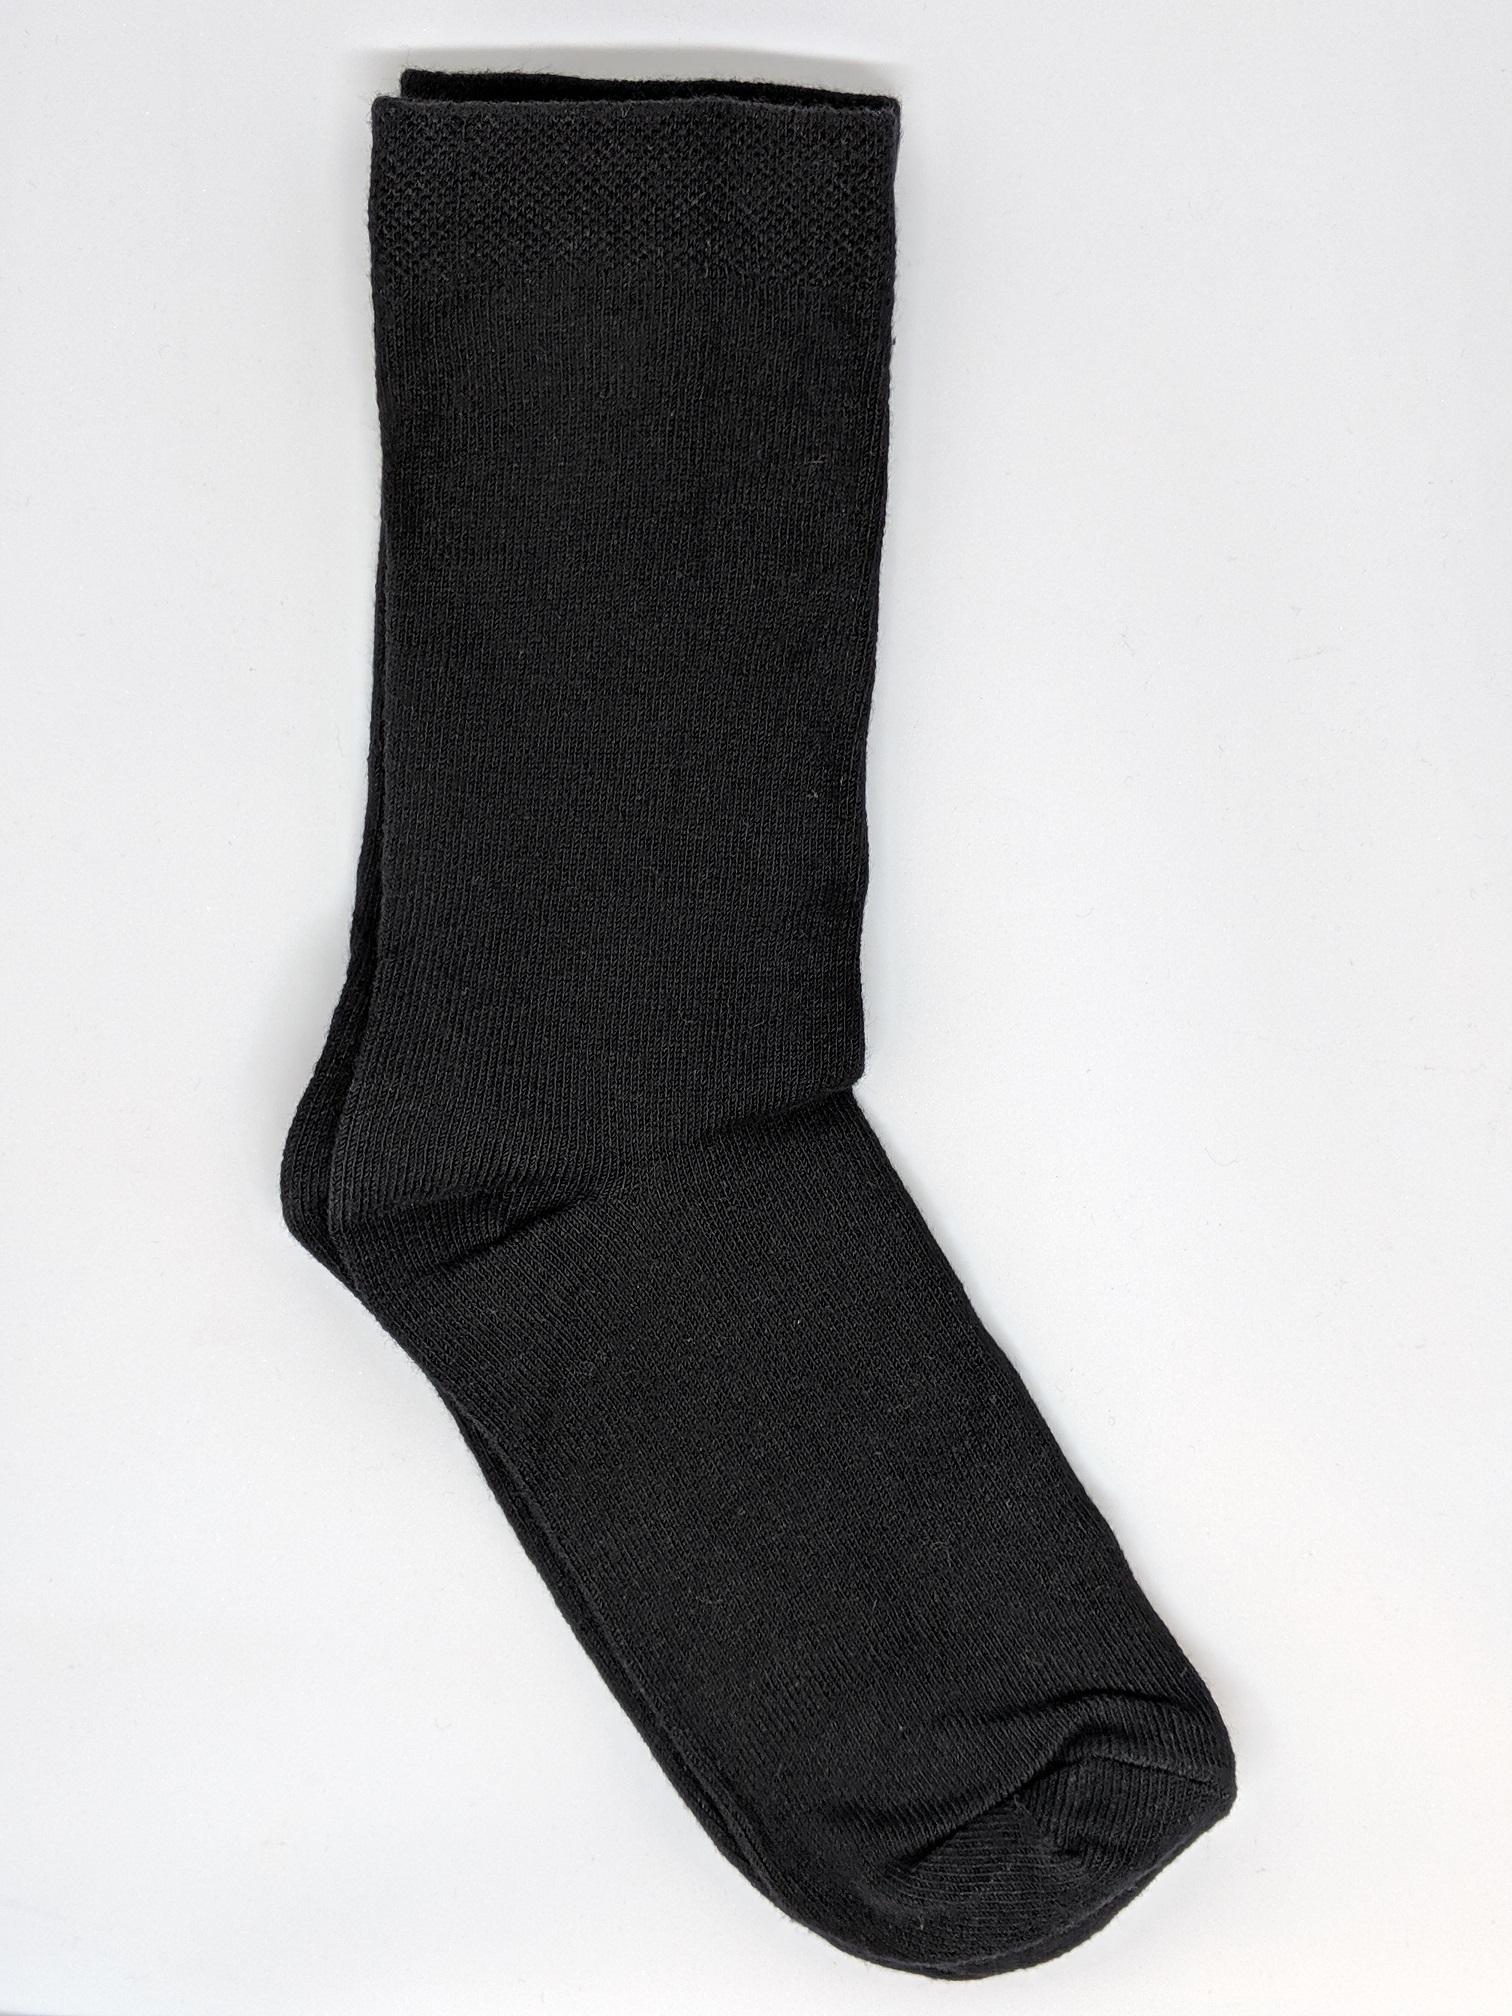 Black Cotton Long School Socks 2 Pair